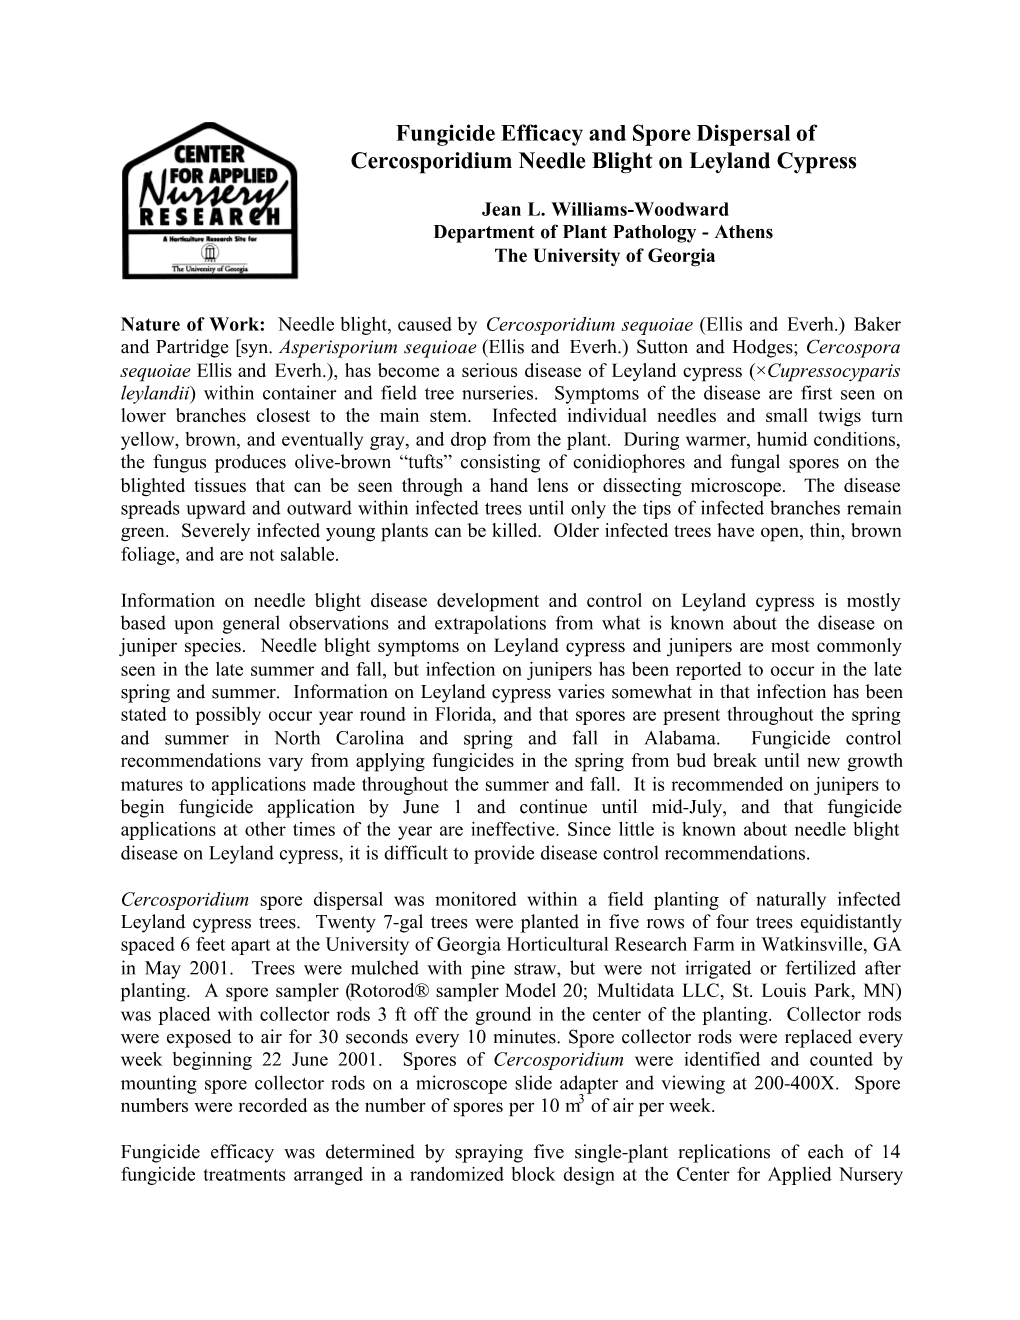 Fungicide Efficacy and Spore Dispersal of Cercosporidium Needle Blight on Leyland Cypress